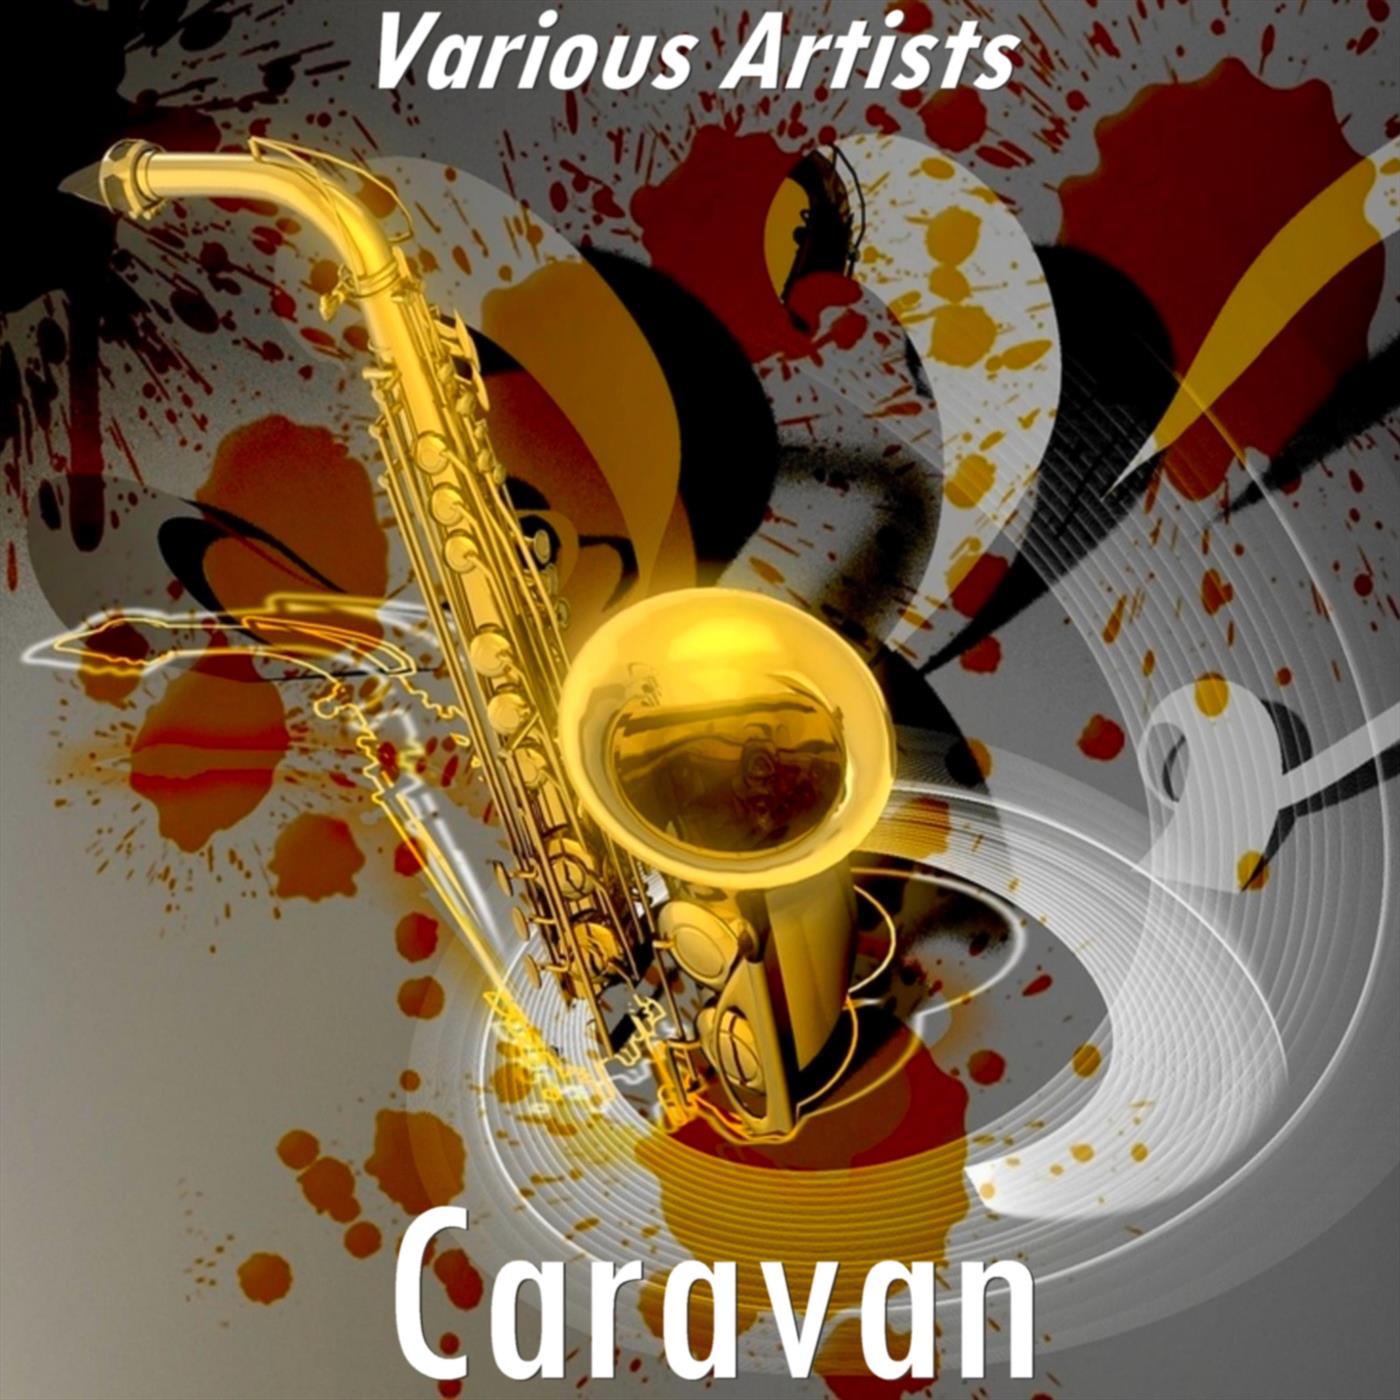 Sy Oliver - Caravan (Version by Sy Oliver)